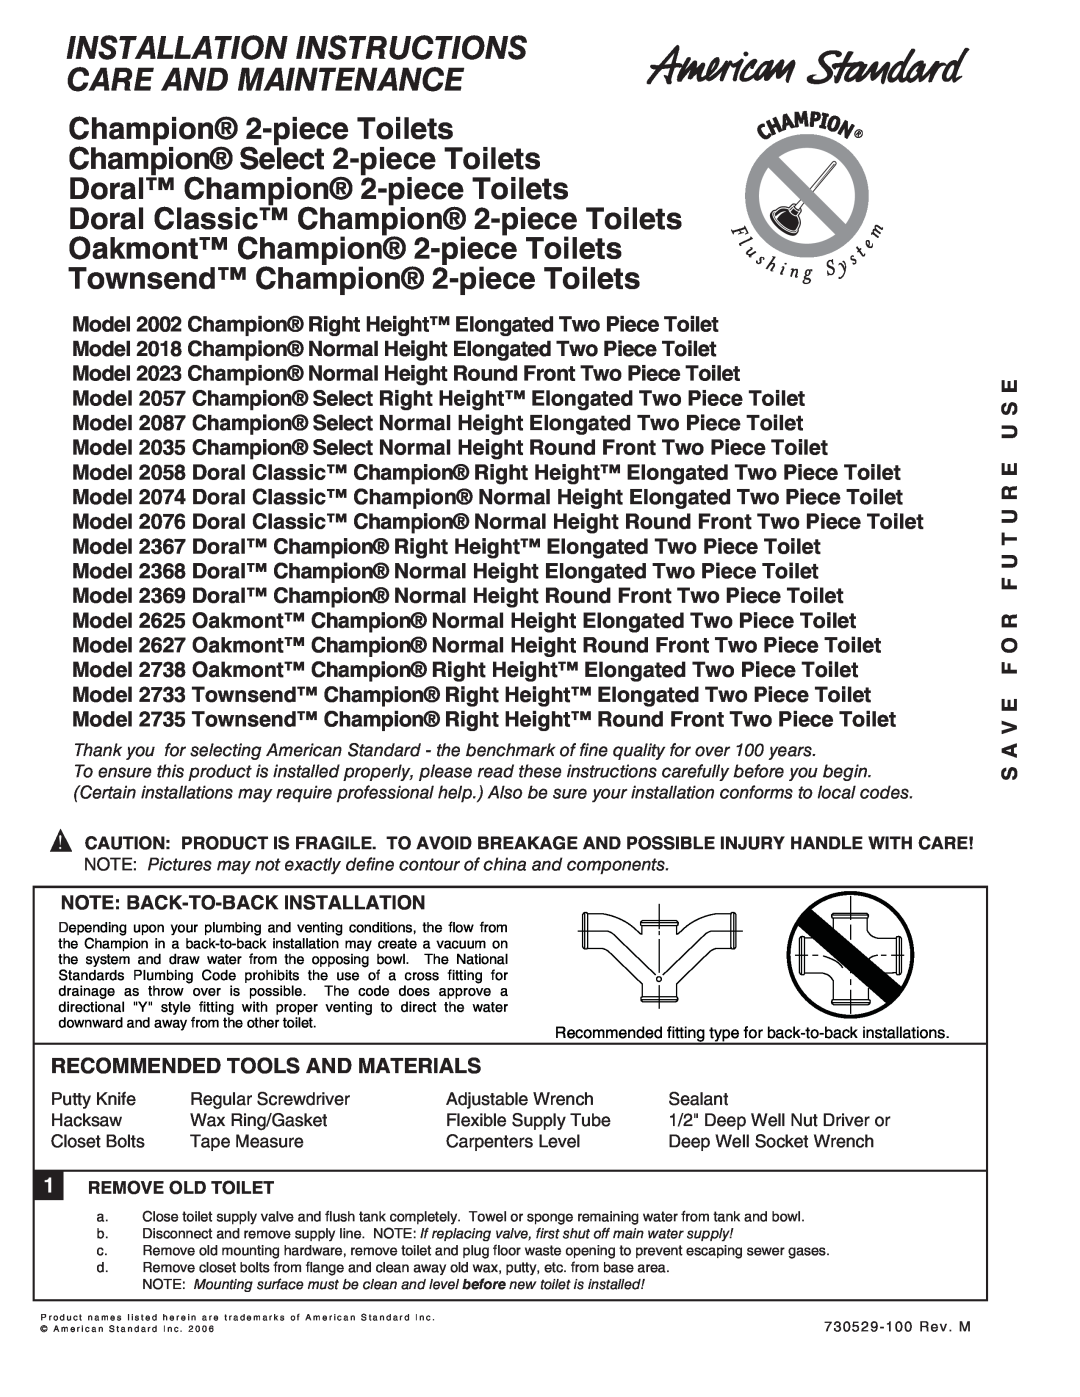 American Standard 3186 installation instructions S A V E F O R F U T U R E U S E, Recommended Tools And Materials, Models 